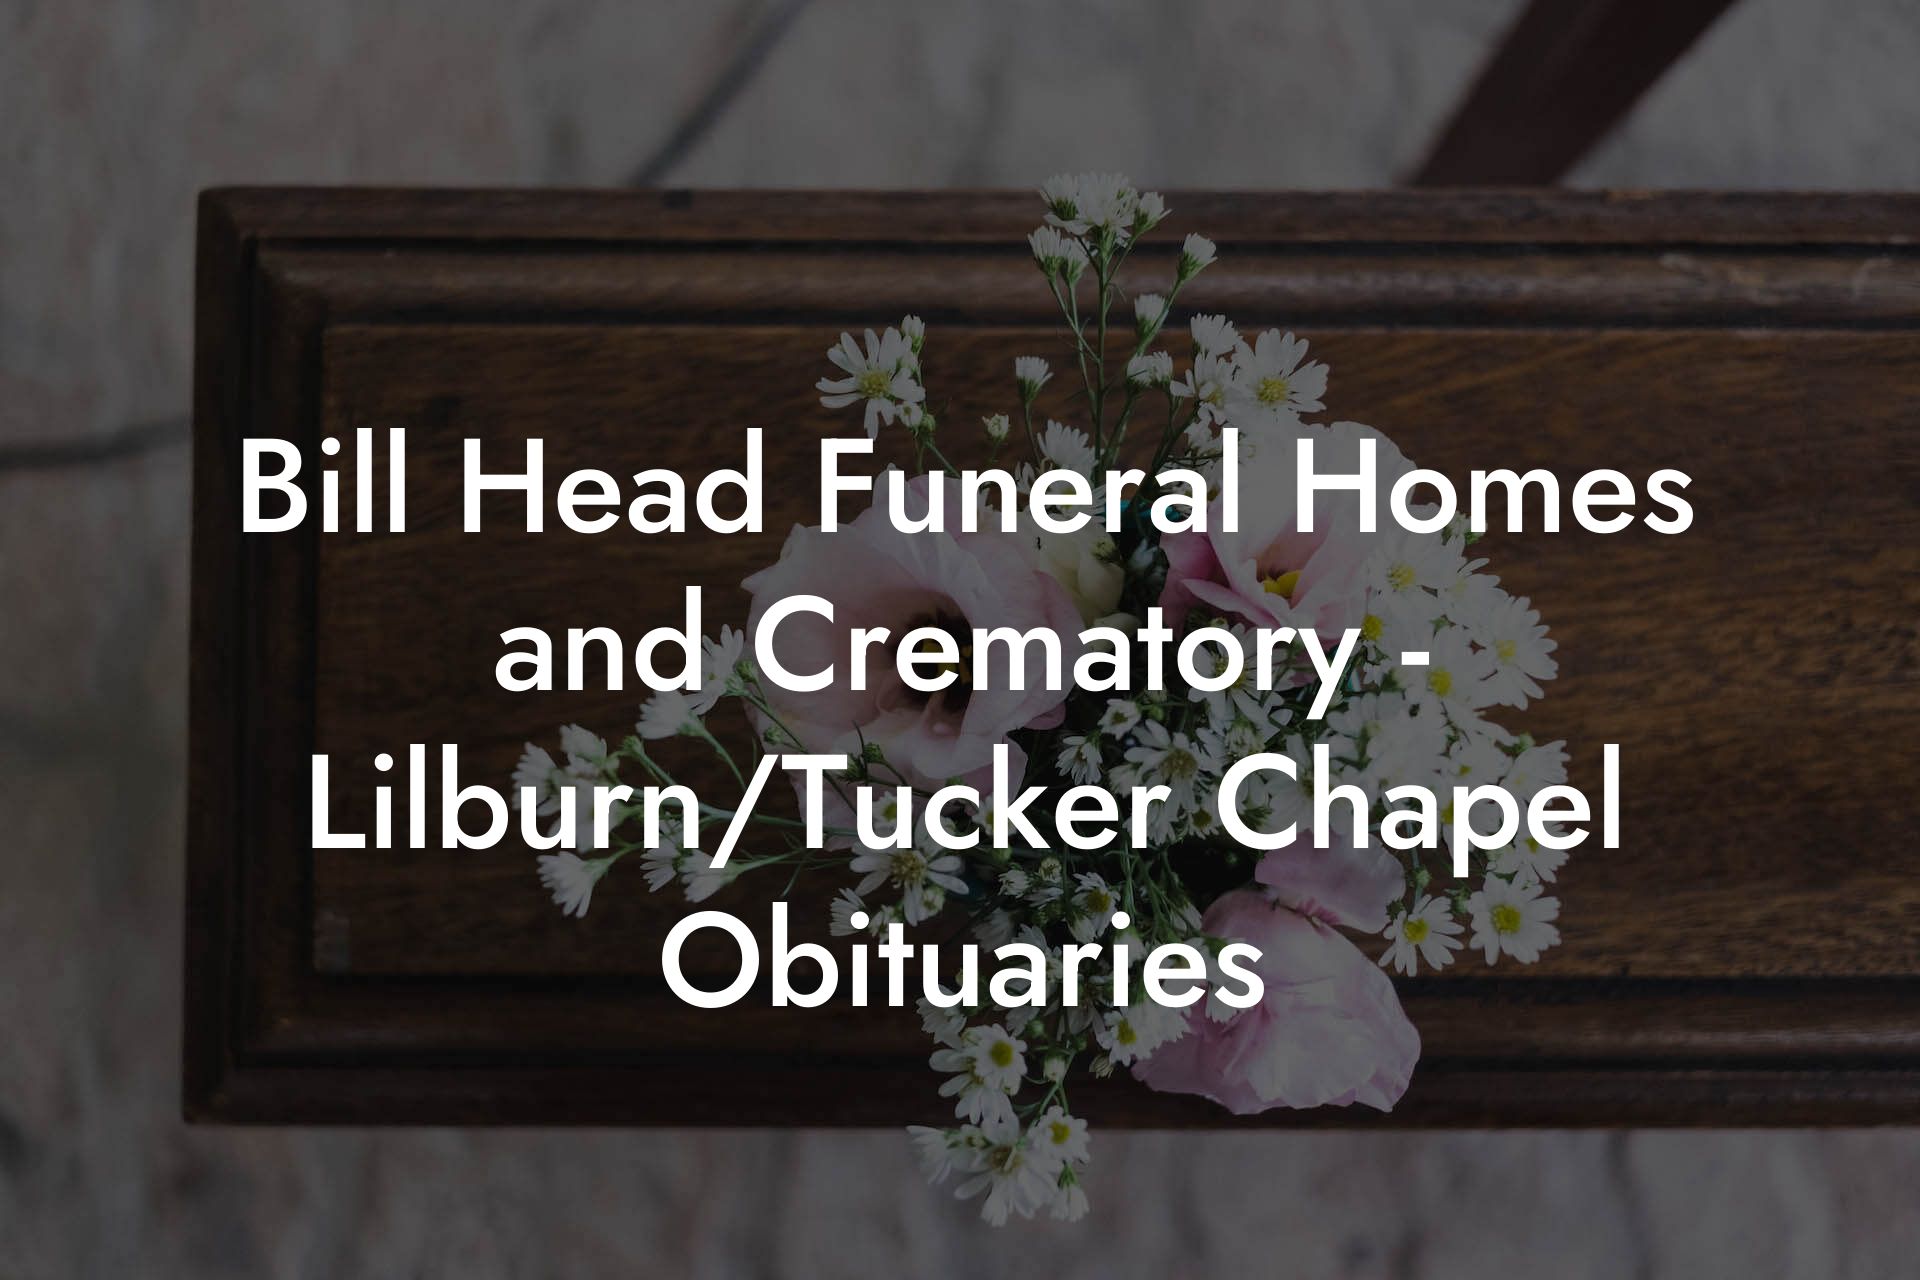 Bill Head Funeral Homes and Crematory - Lilburn/Tucker Chapel Obituaries